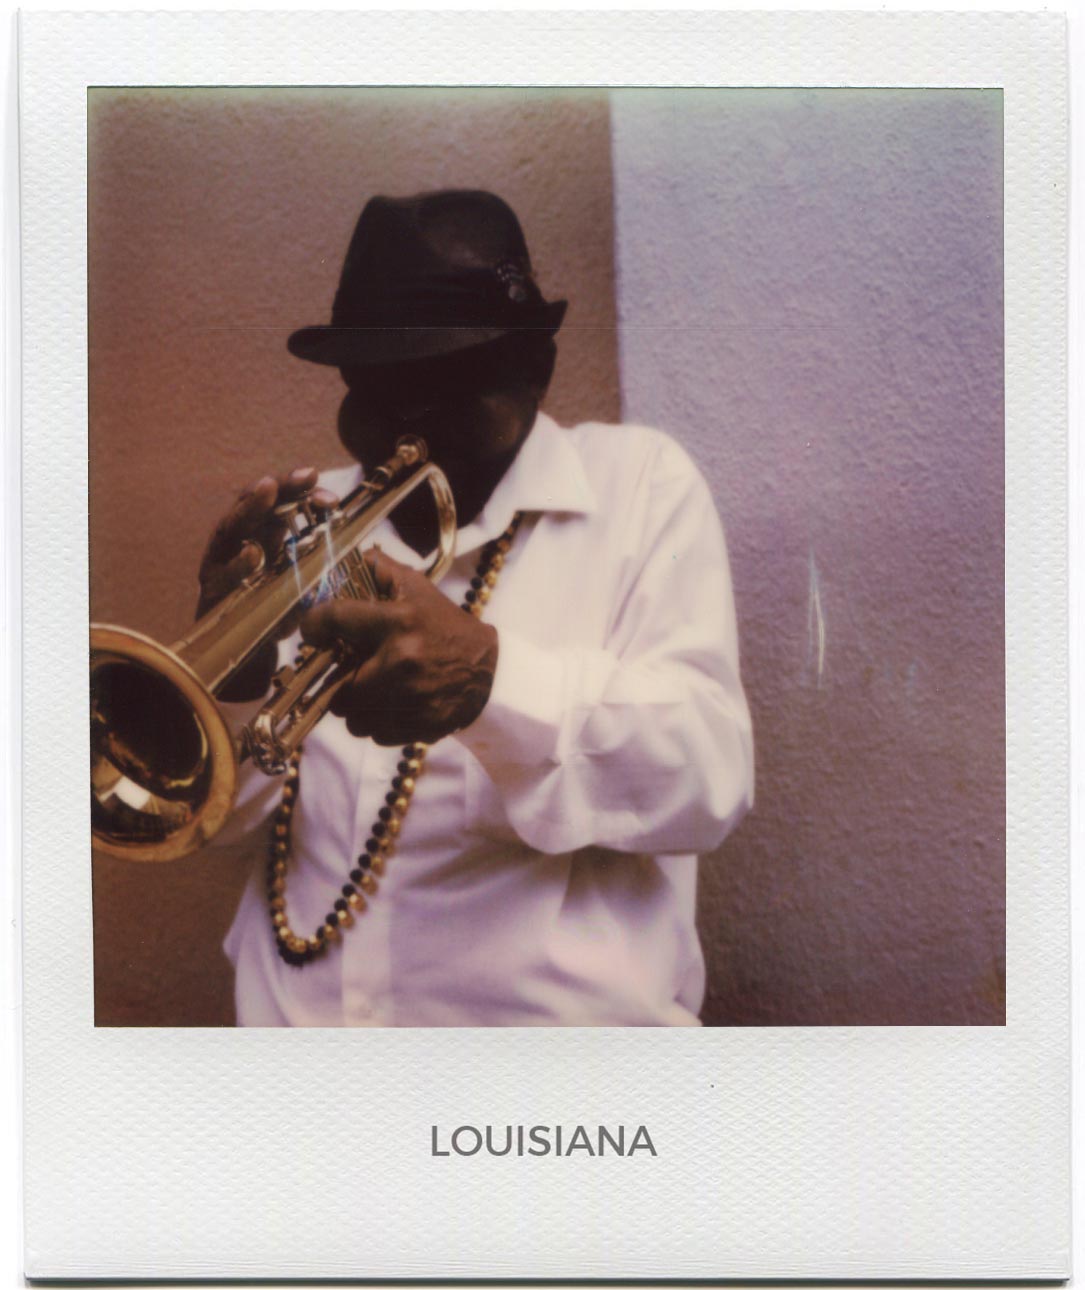 Louisiana Florent Dudognon Polaroid